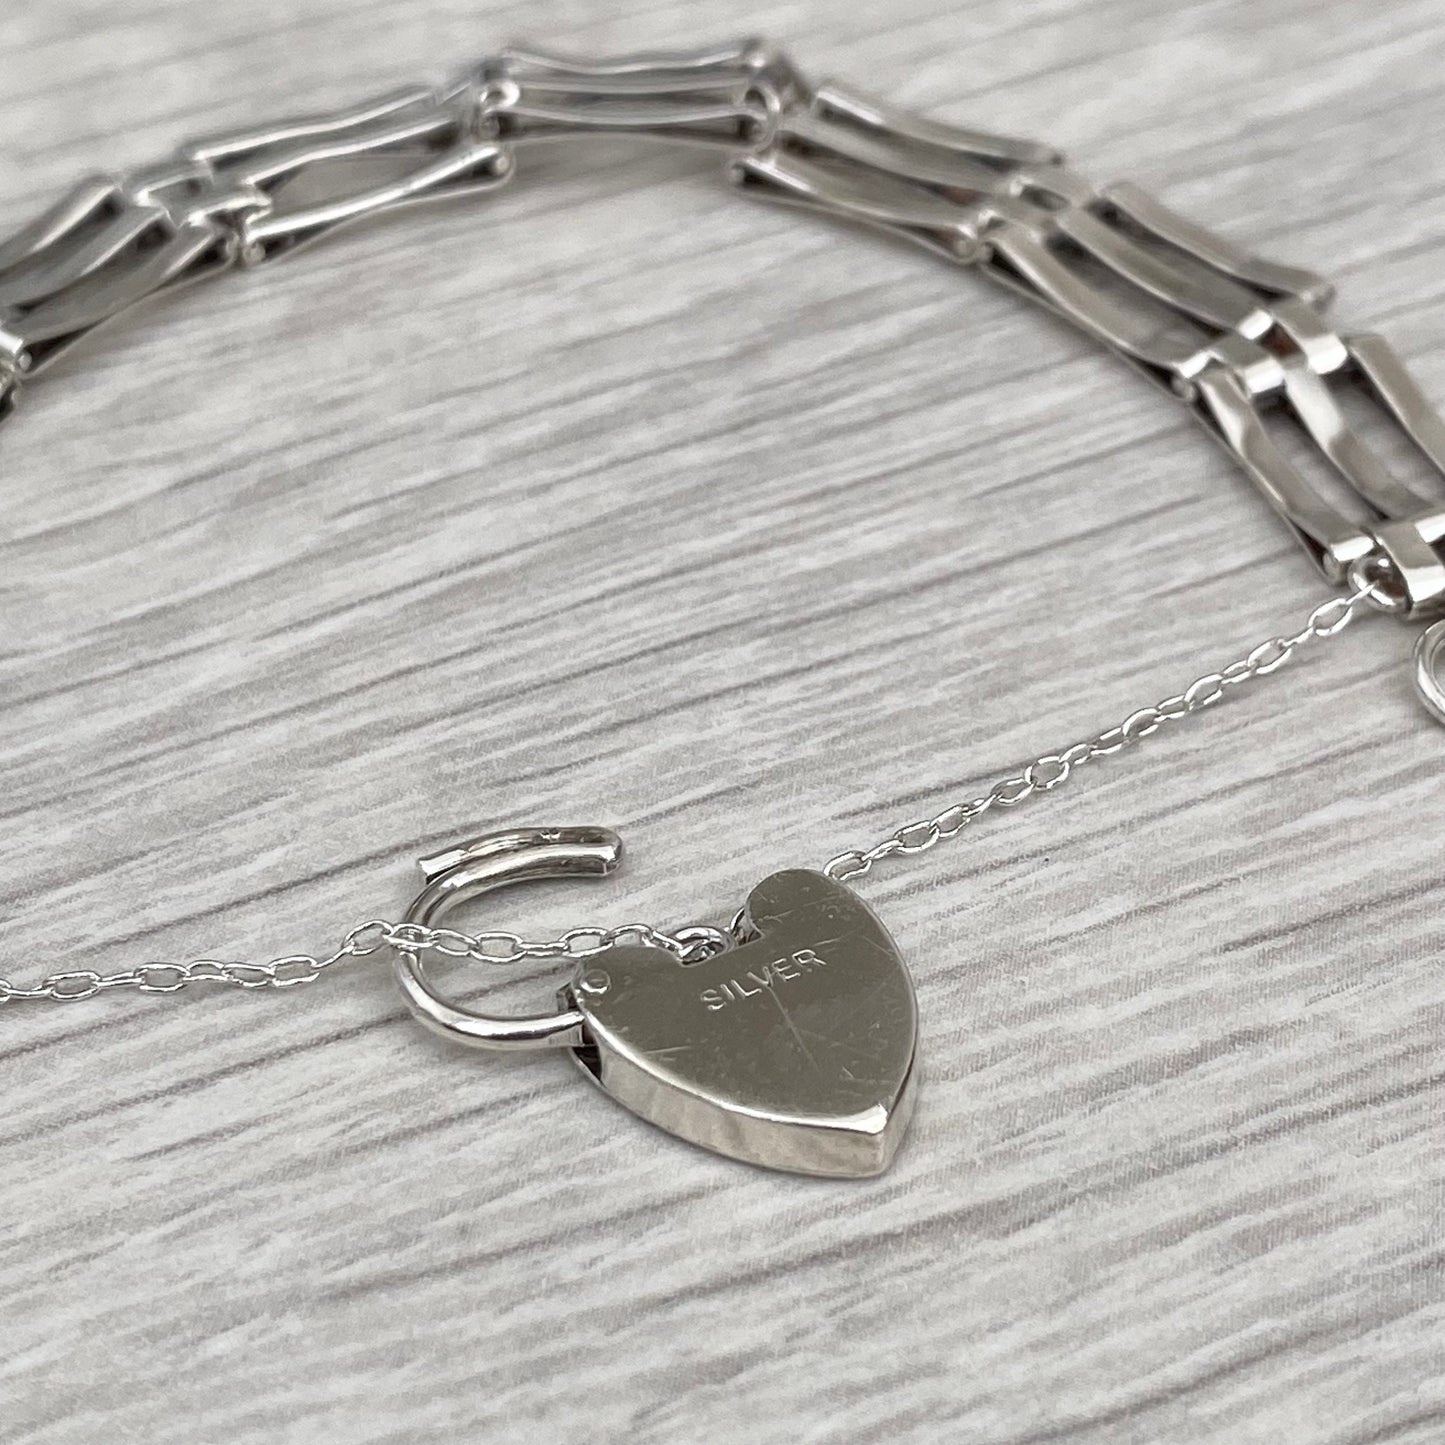 Vintage silver heart padlock gate link bracelet - 1980s - 7 inches - Vintage british jewellery